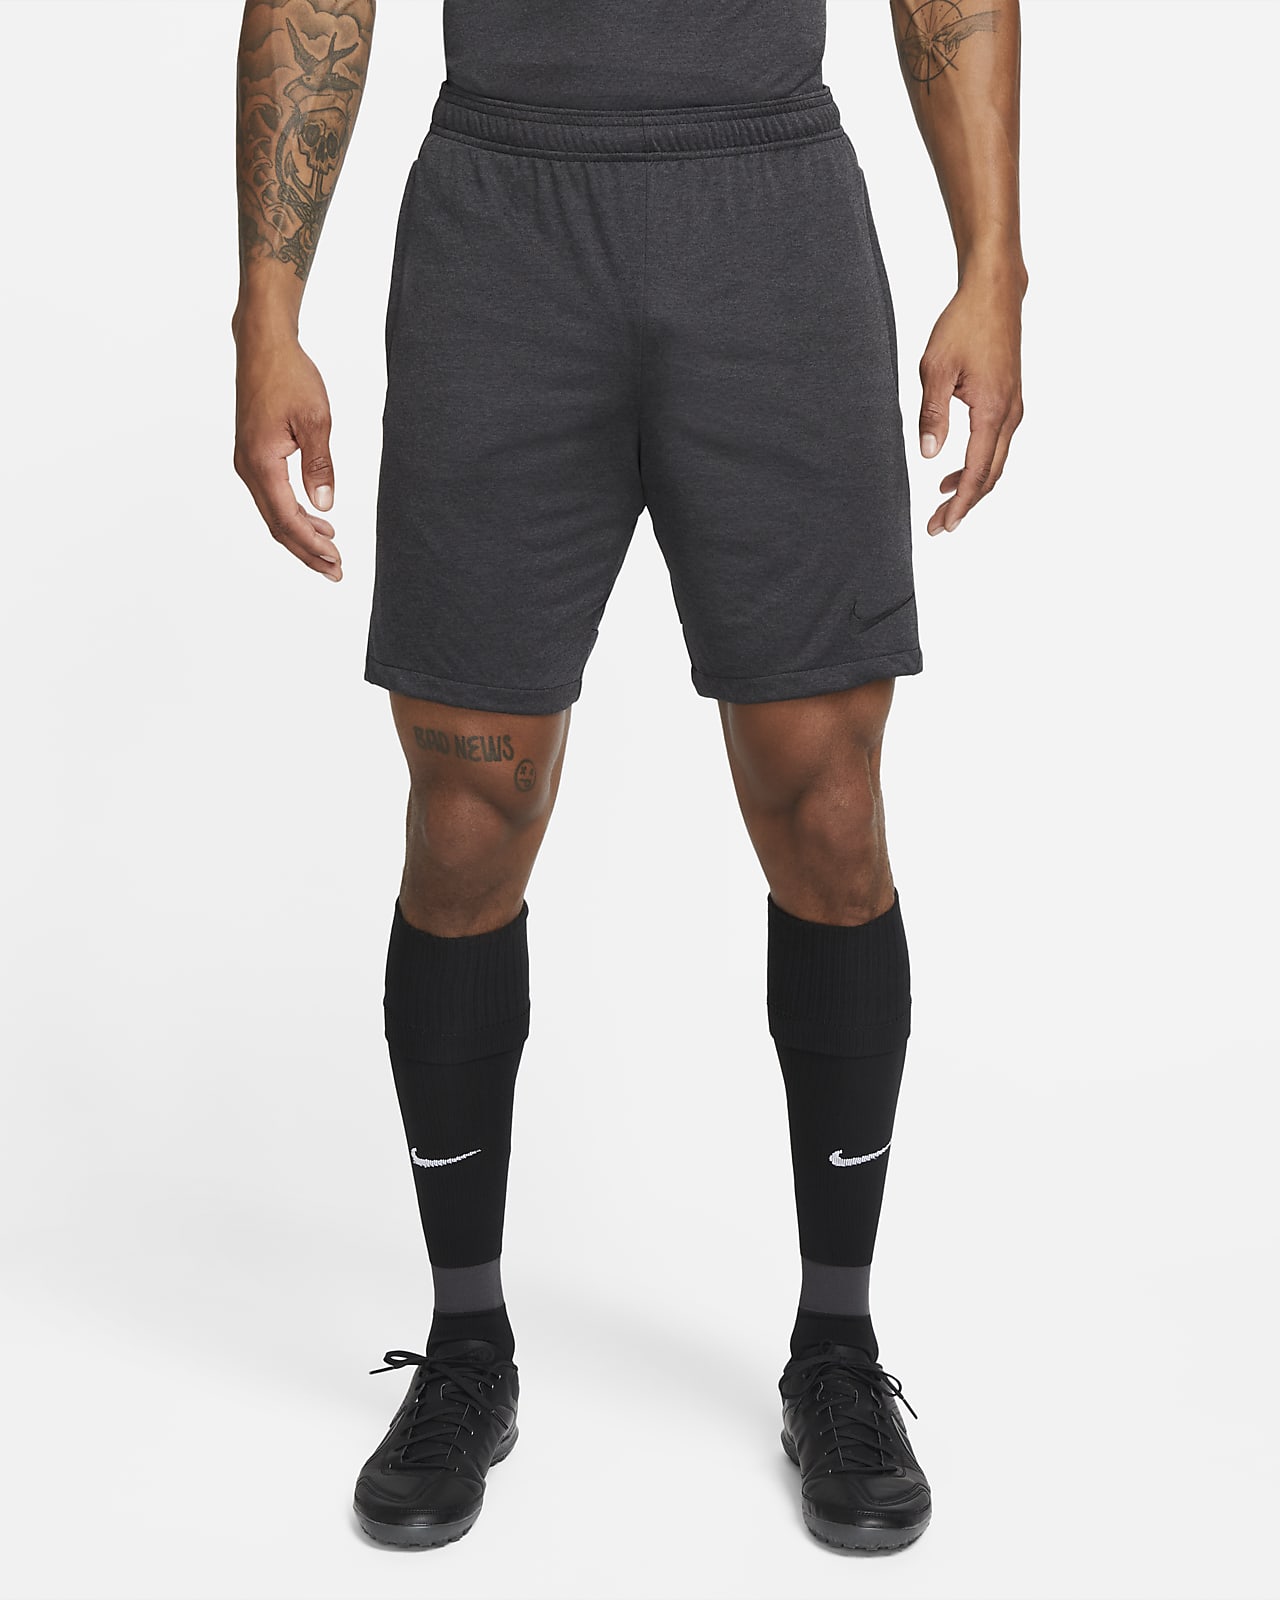 Shorts de fútbol Dri-FIT para hombre Nike Academy